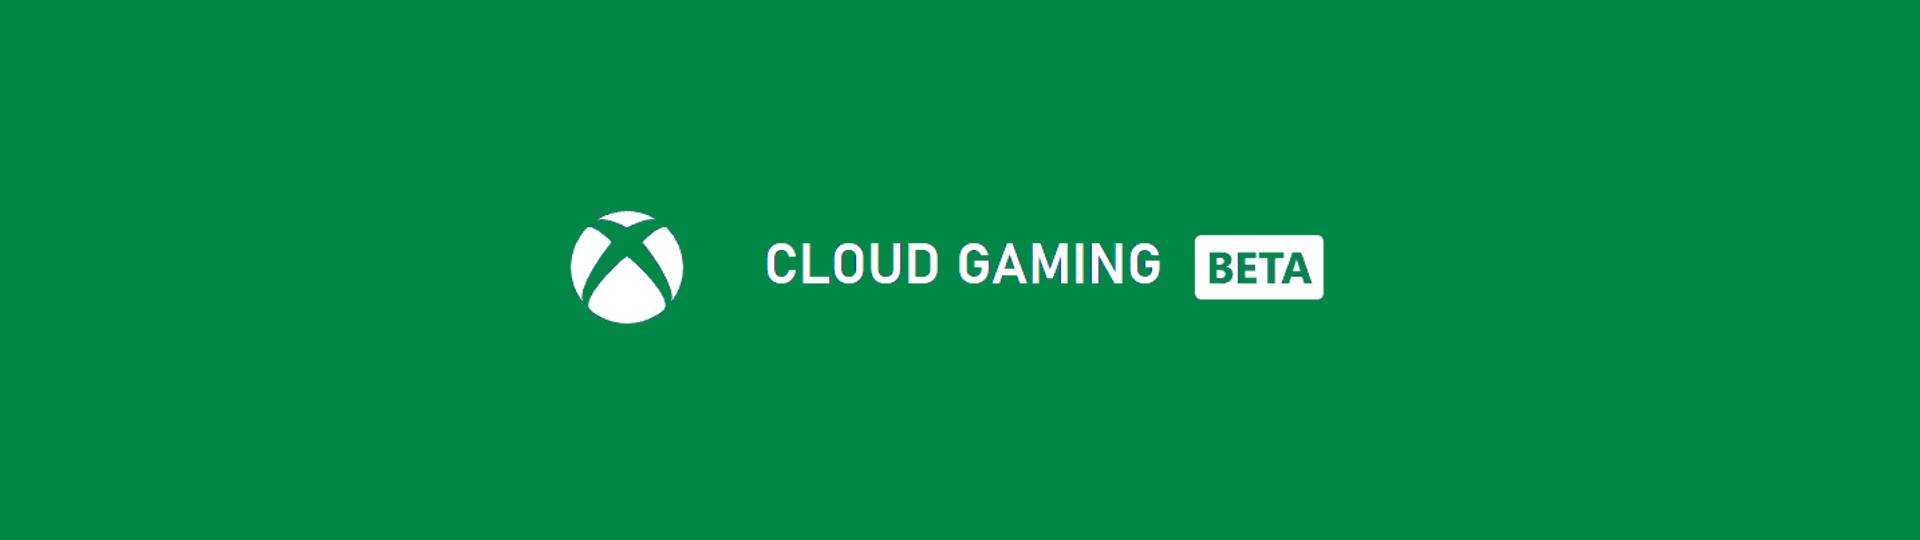 Xbox Cloud Gaming Stick slice